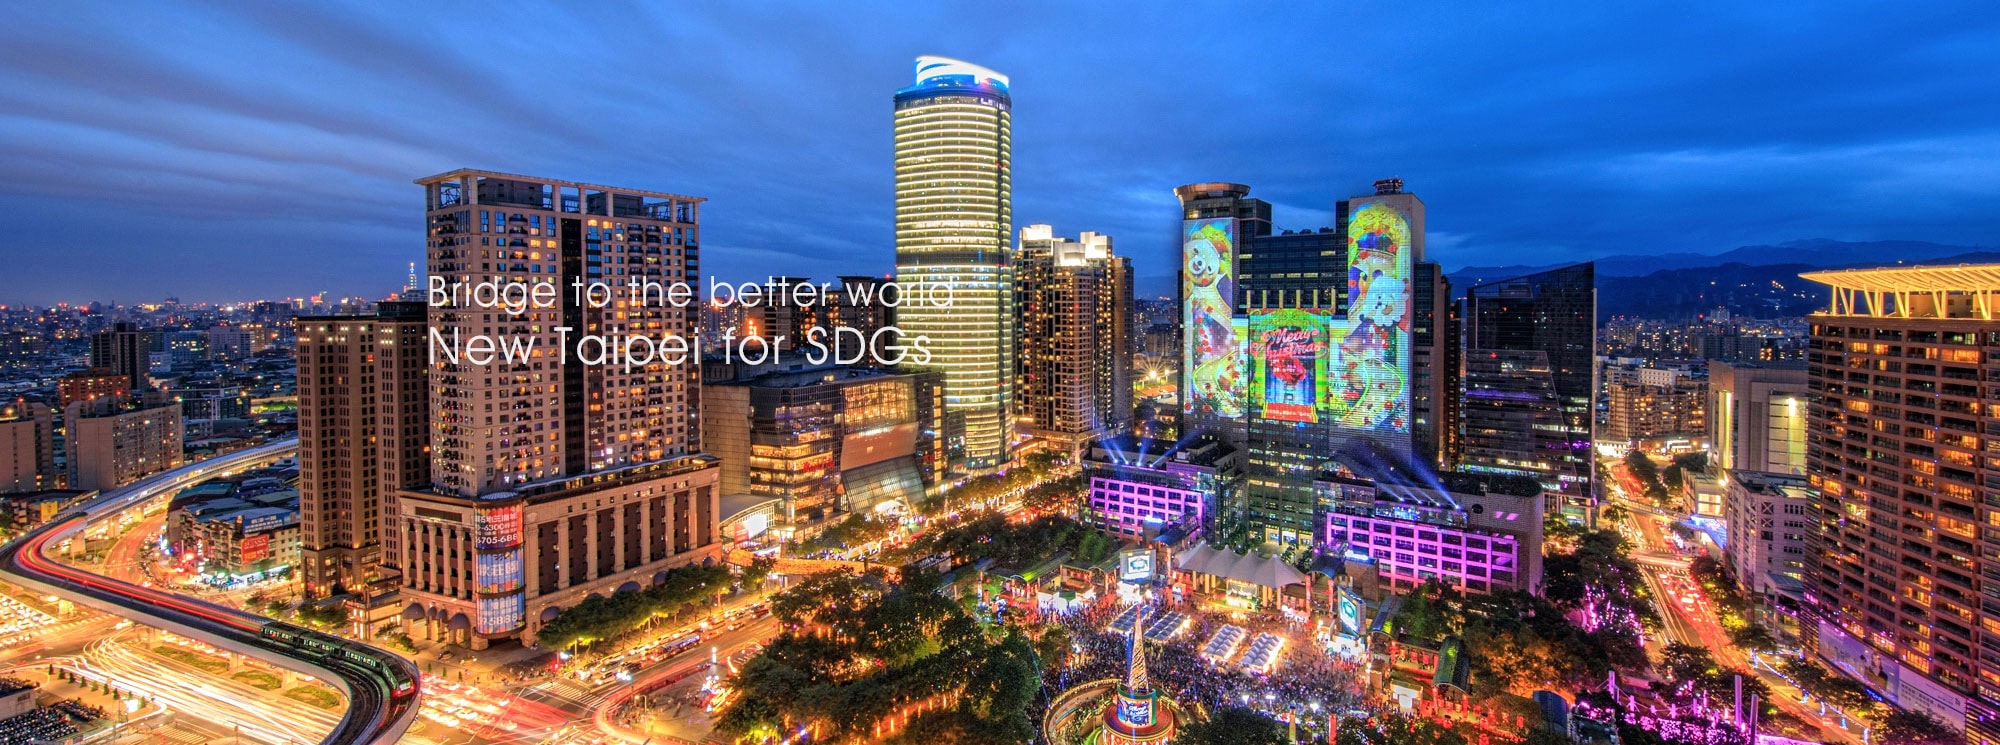 Bridge to the better word New Taipei for SDGs(2)(open new window)